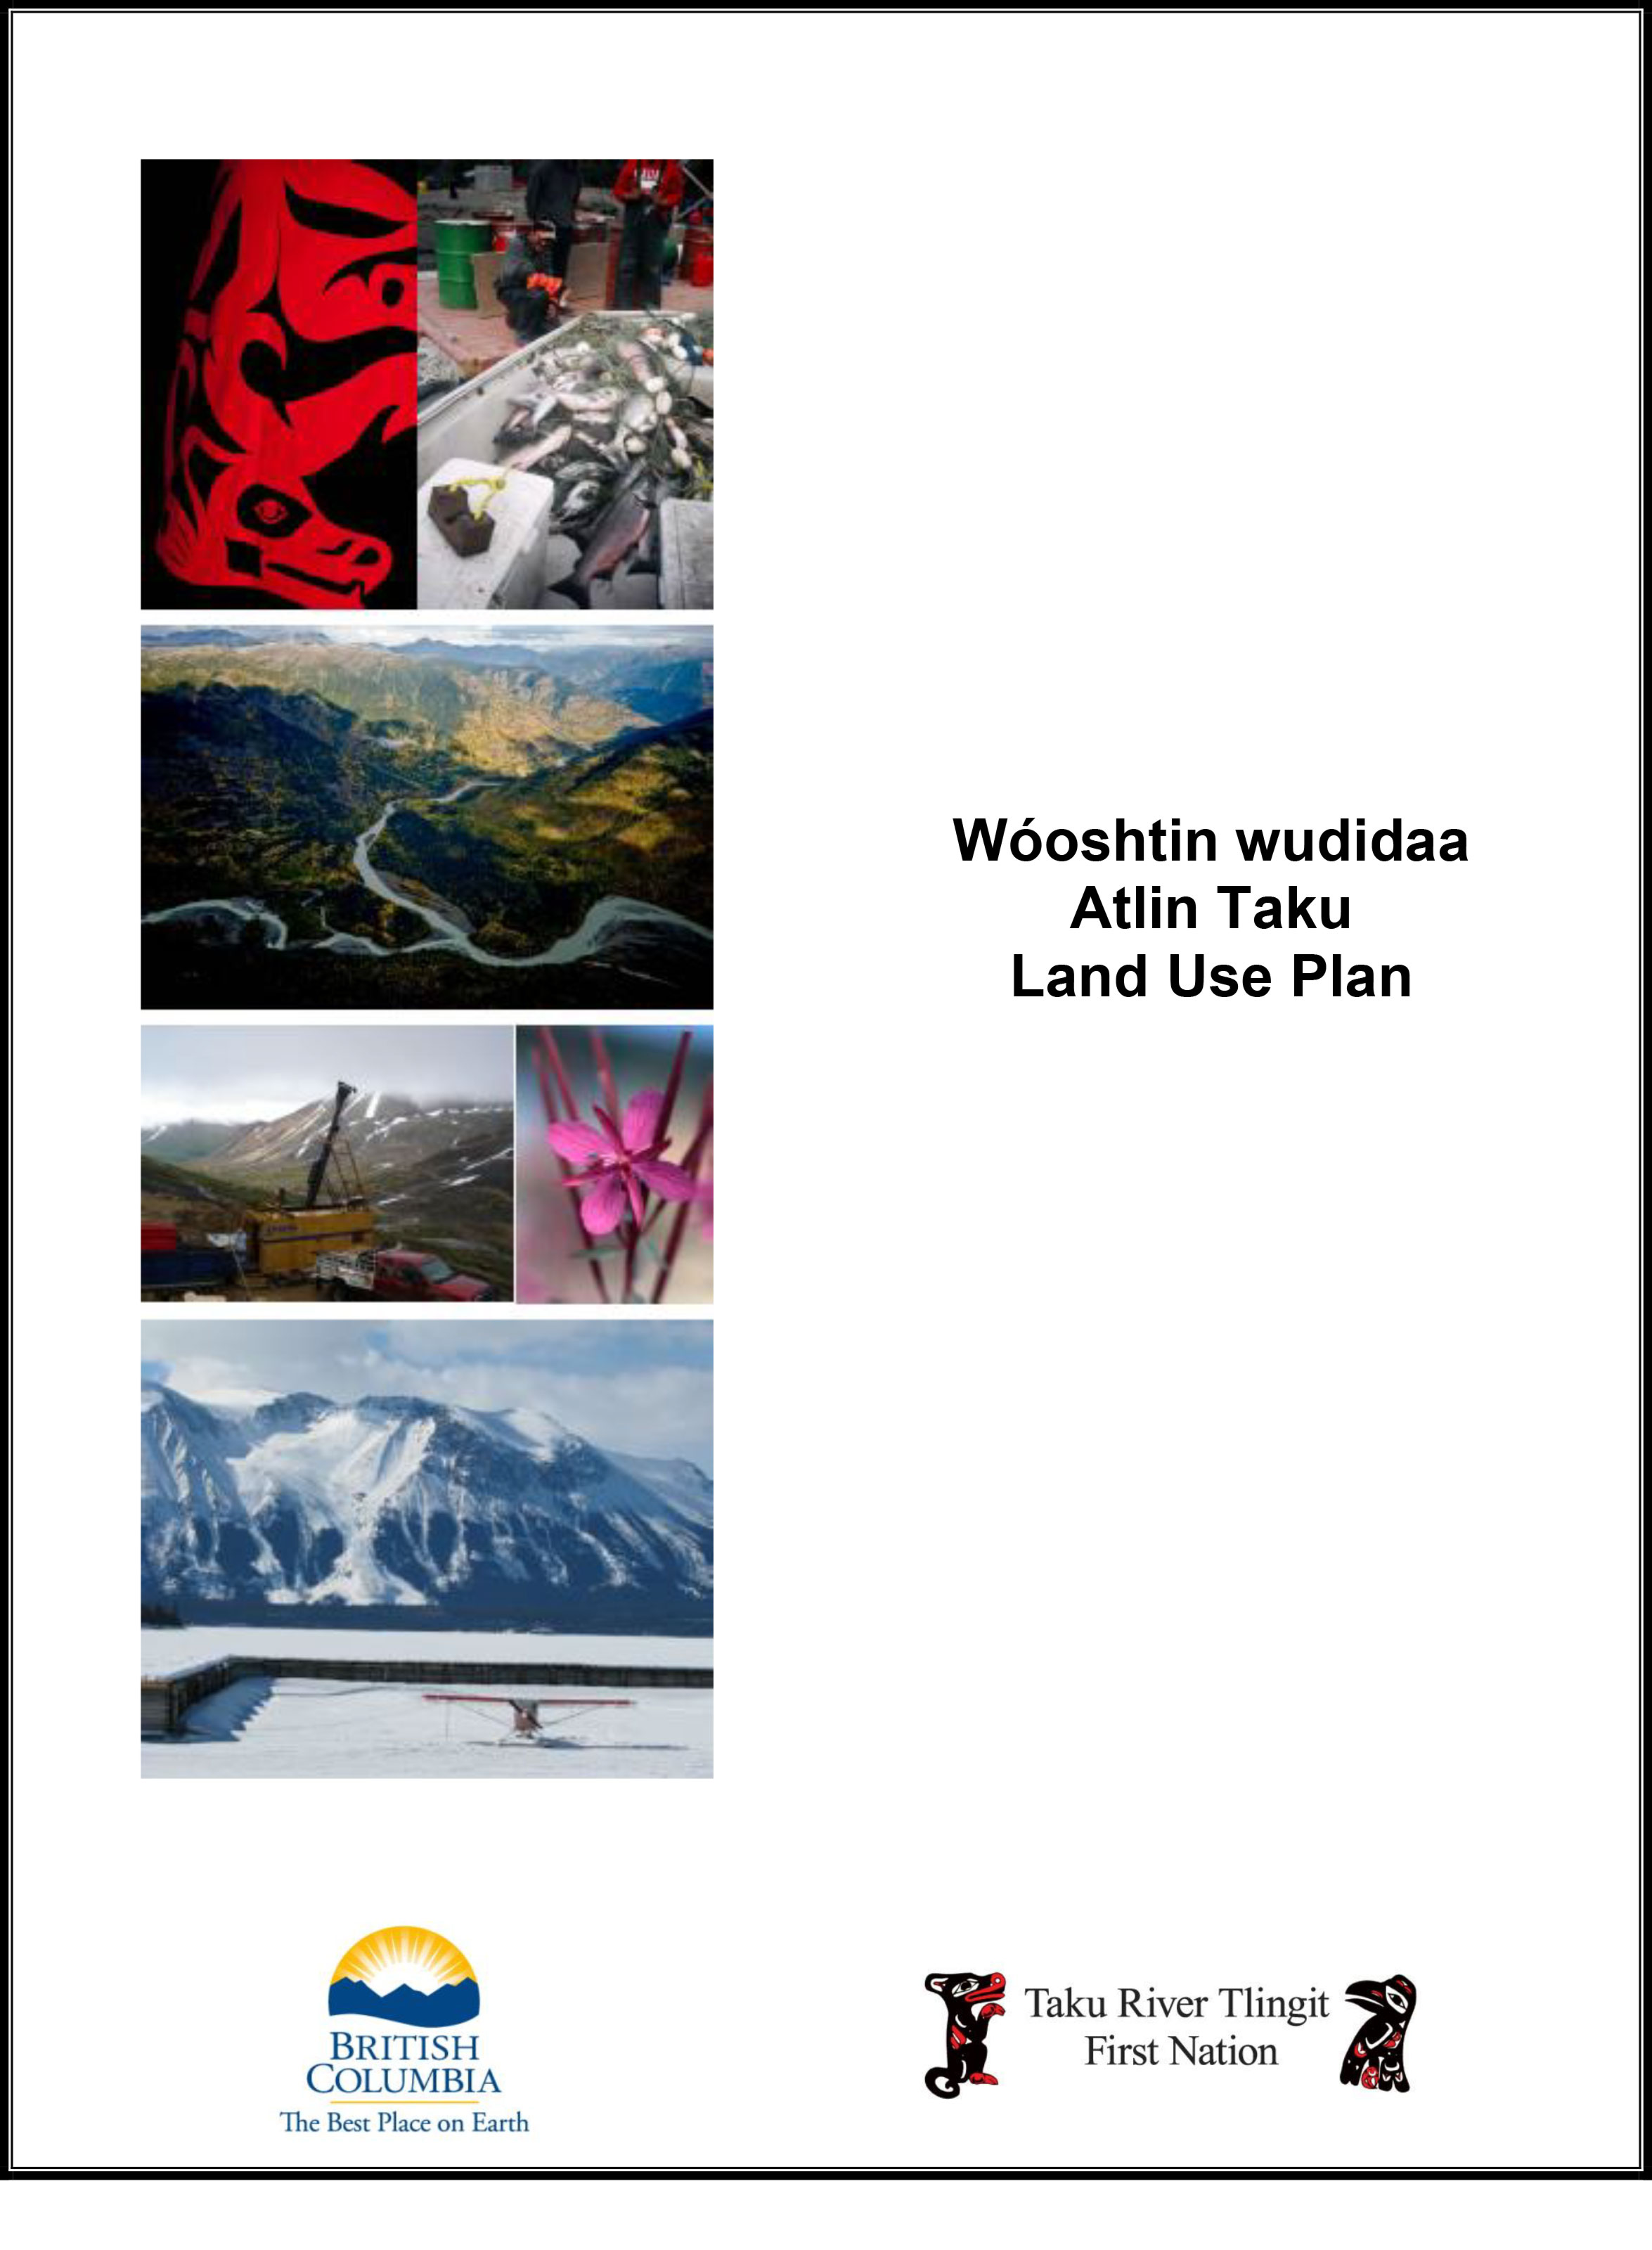 Wooshtin-Wudidaa-The-Atlin-Taku-Land-Use-Plan